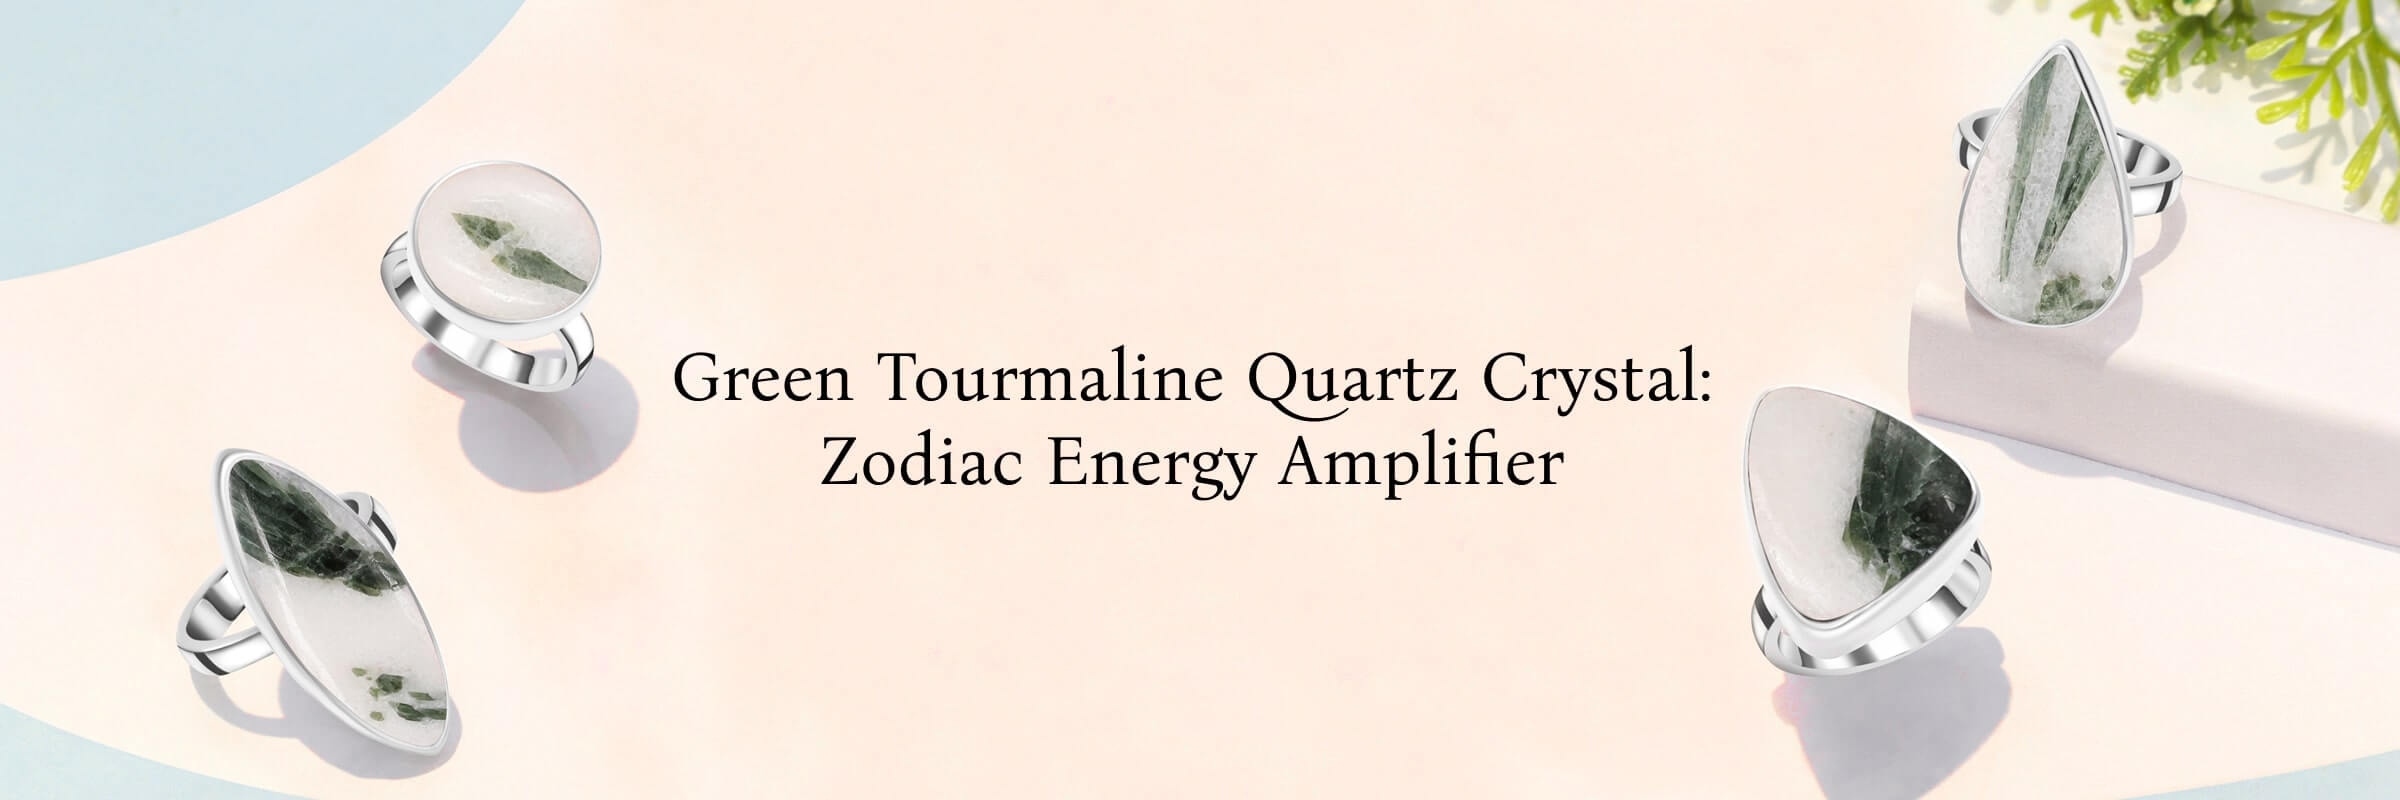 Zodiac Sign of Green Tourmaline Quartz Crystal